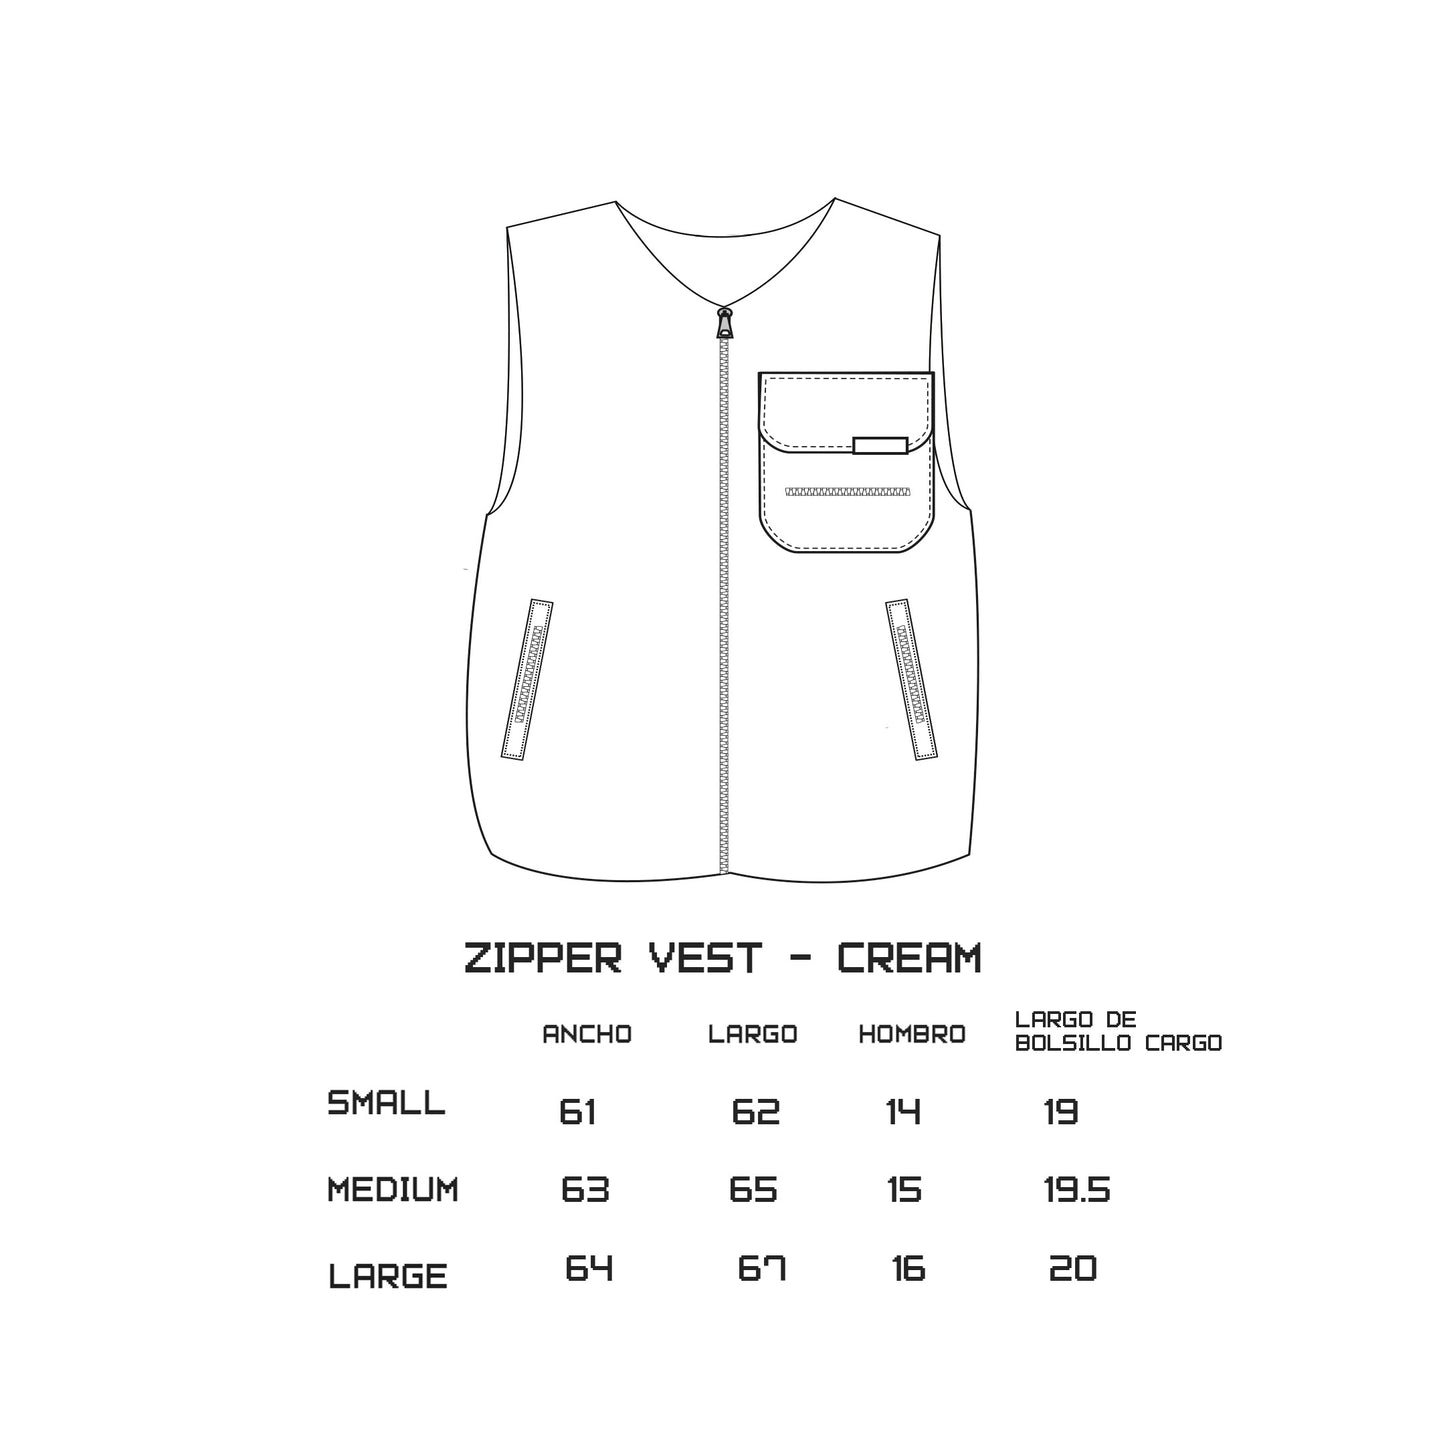 zipper vest - cream